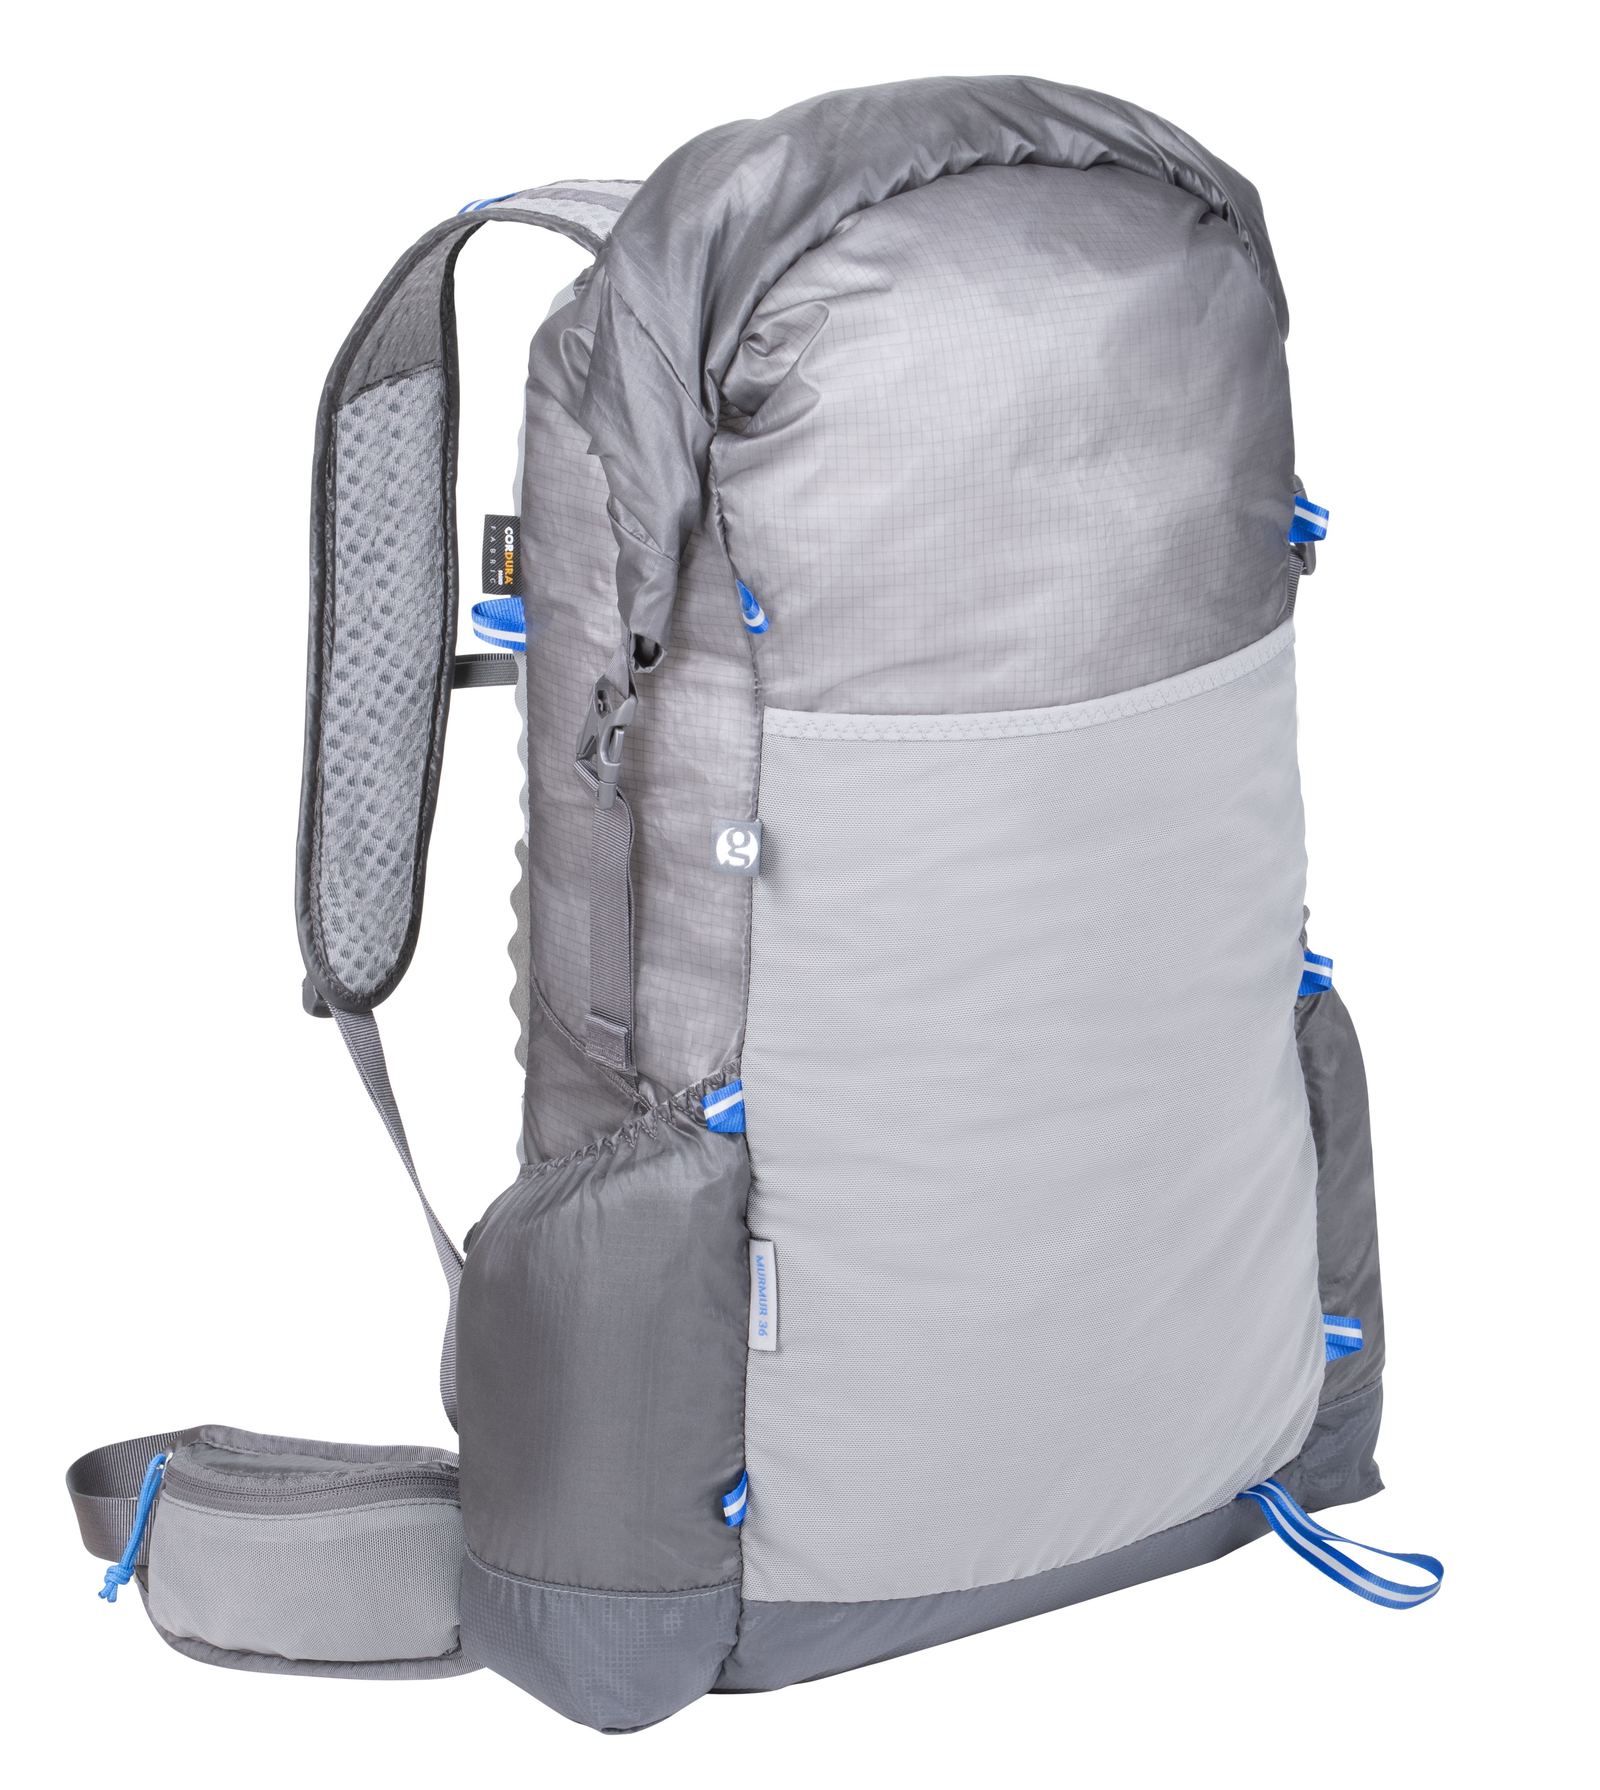 Gossamer Gear murmur 36 hyperlight backpack ...